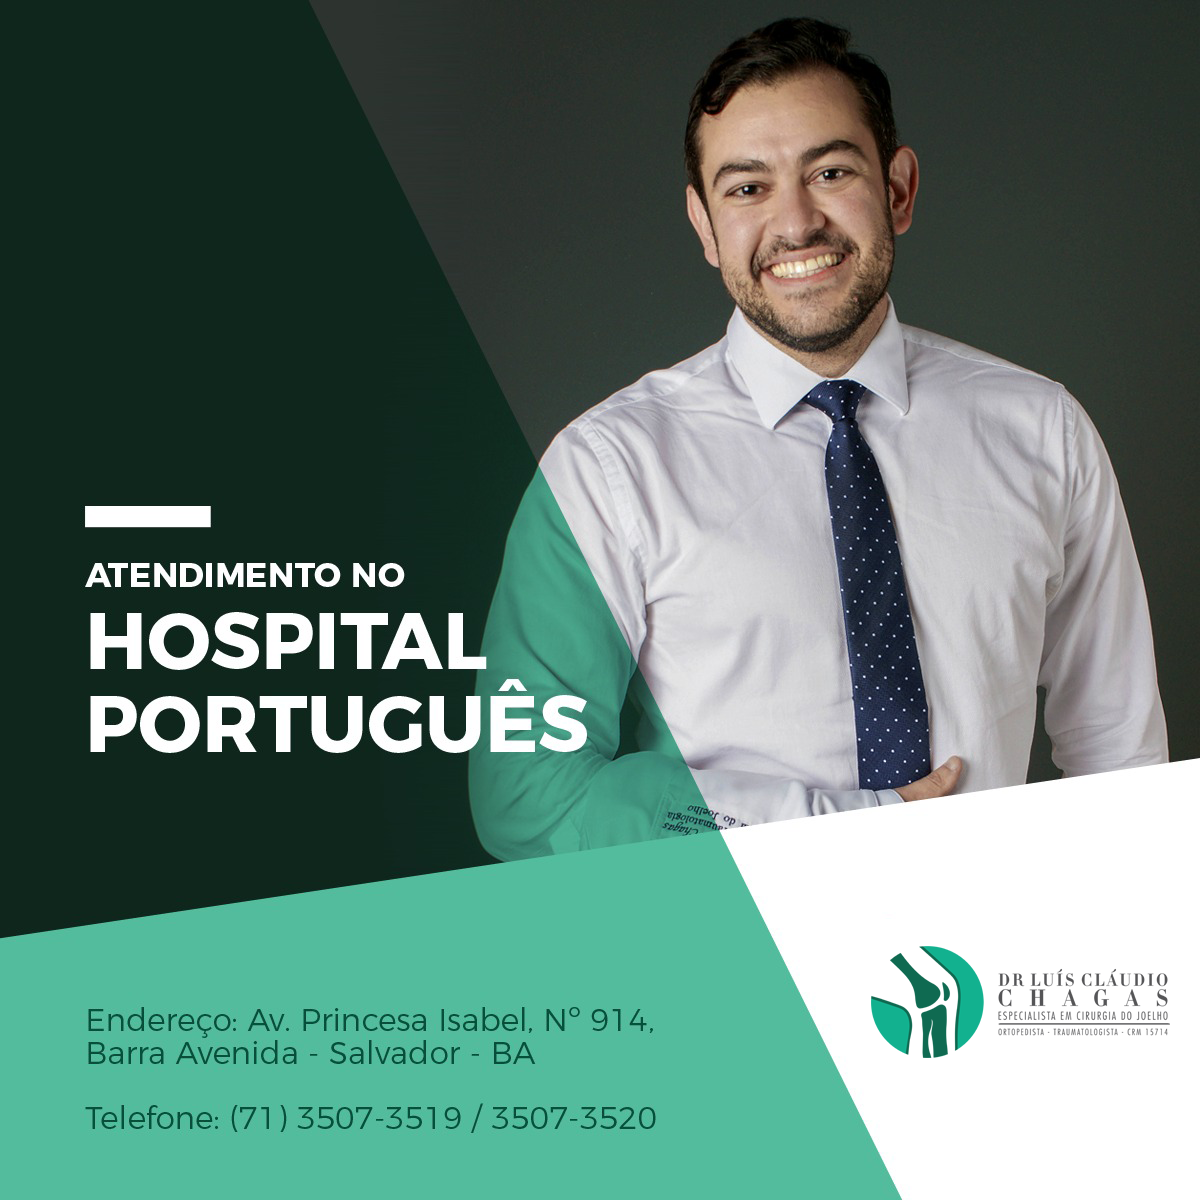 Hospital Português